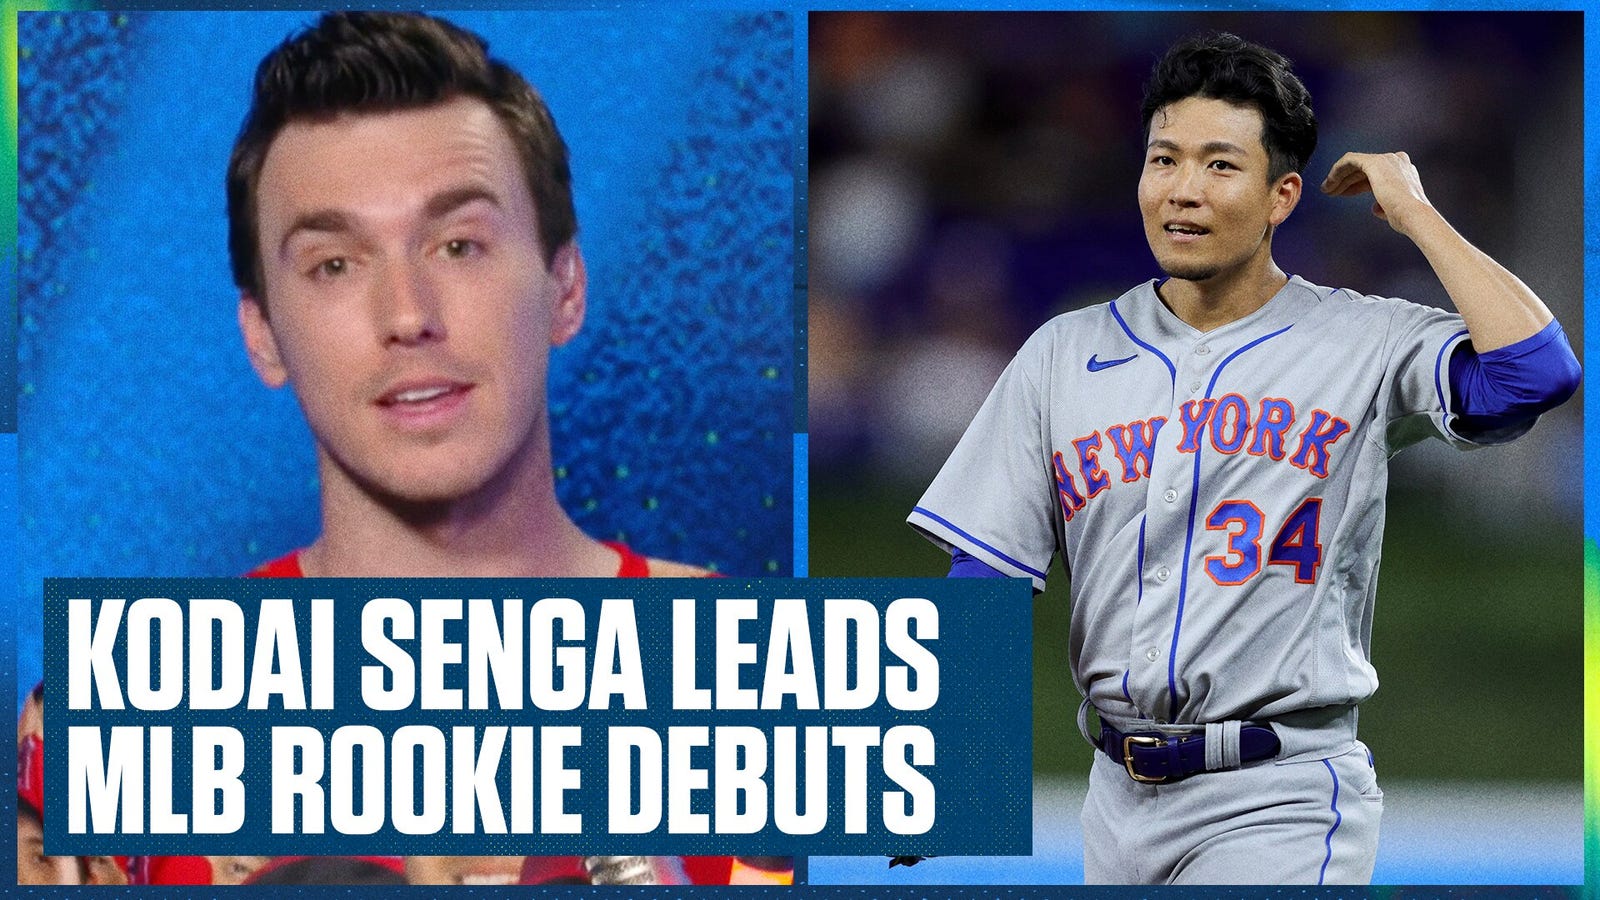 Mets' Kodai Senga headlines the top 3 MLB Rookie debuts for 2023 